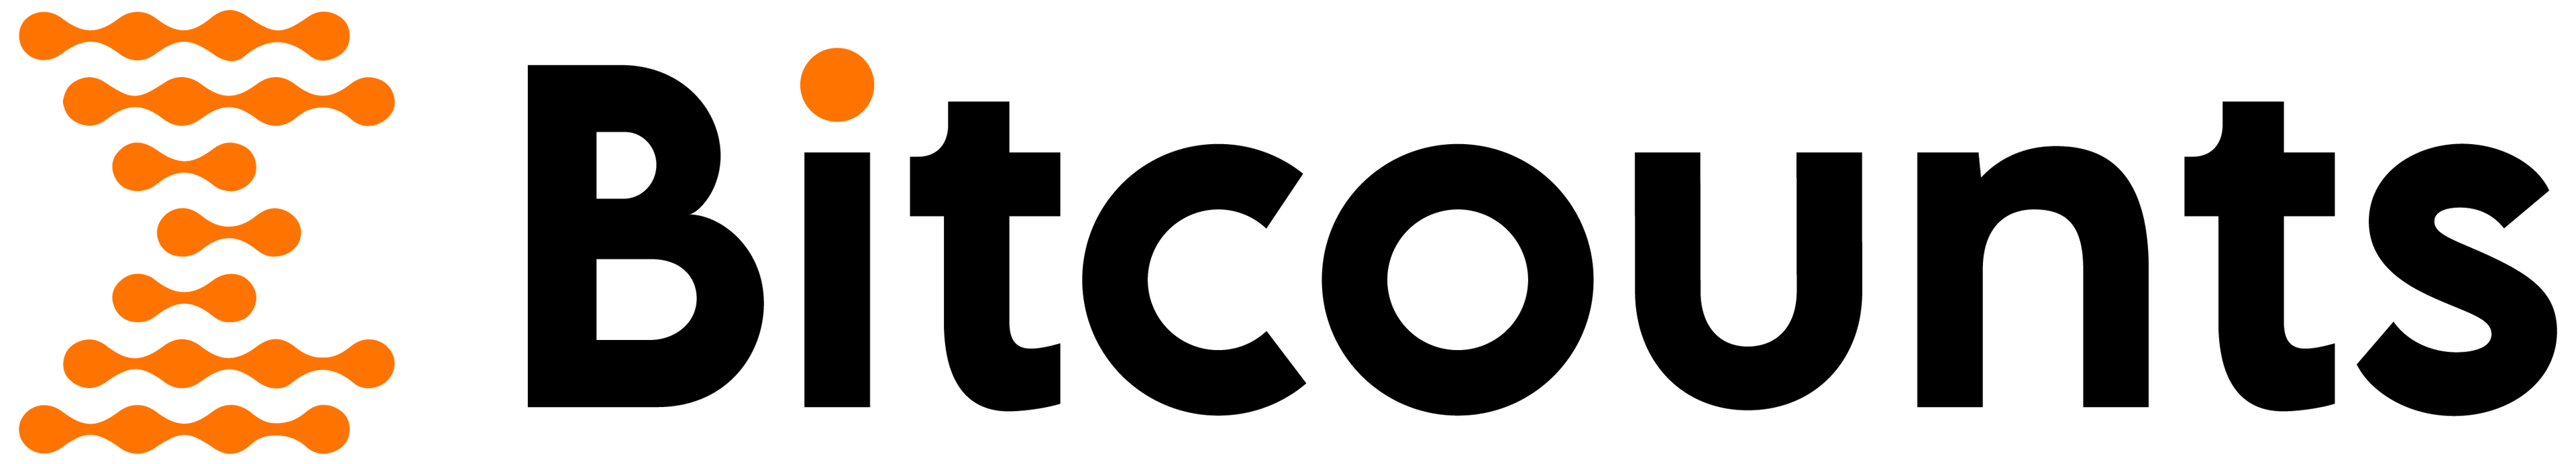 Bitcounts Inc. logo